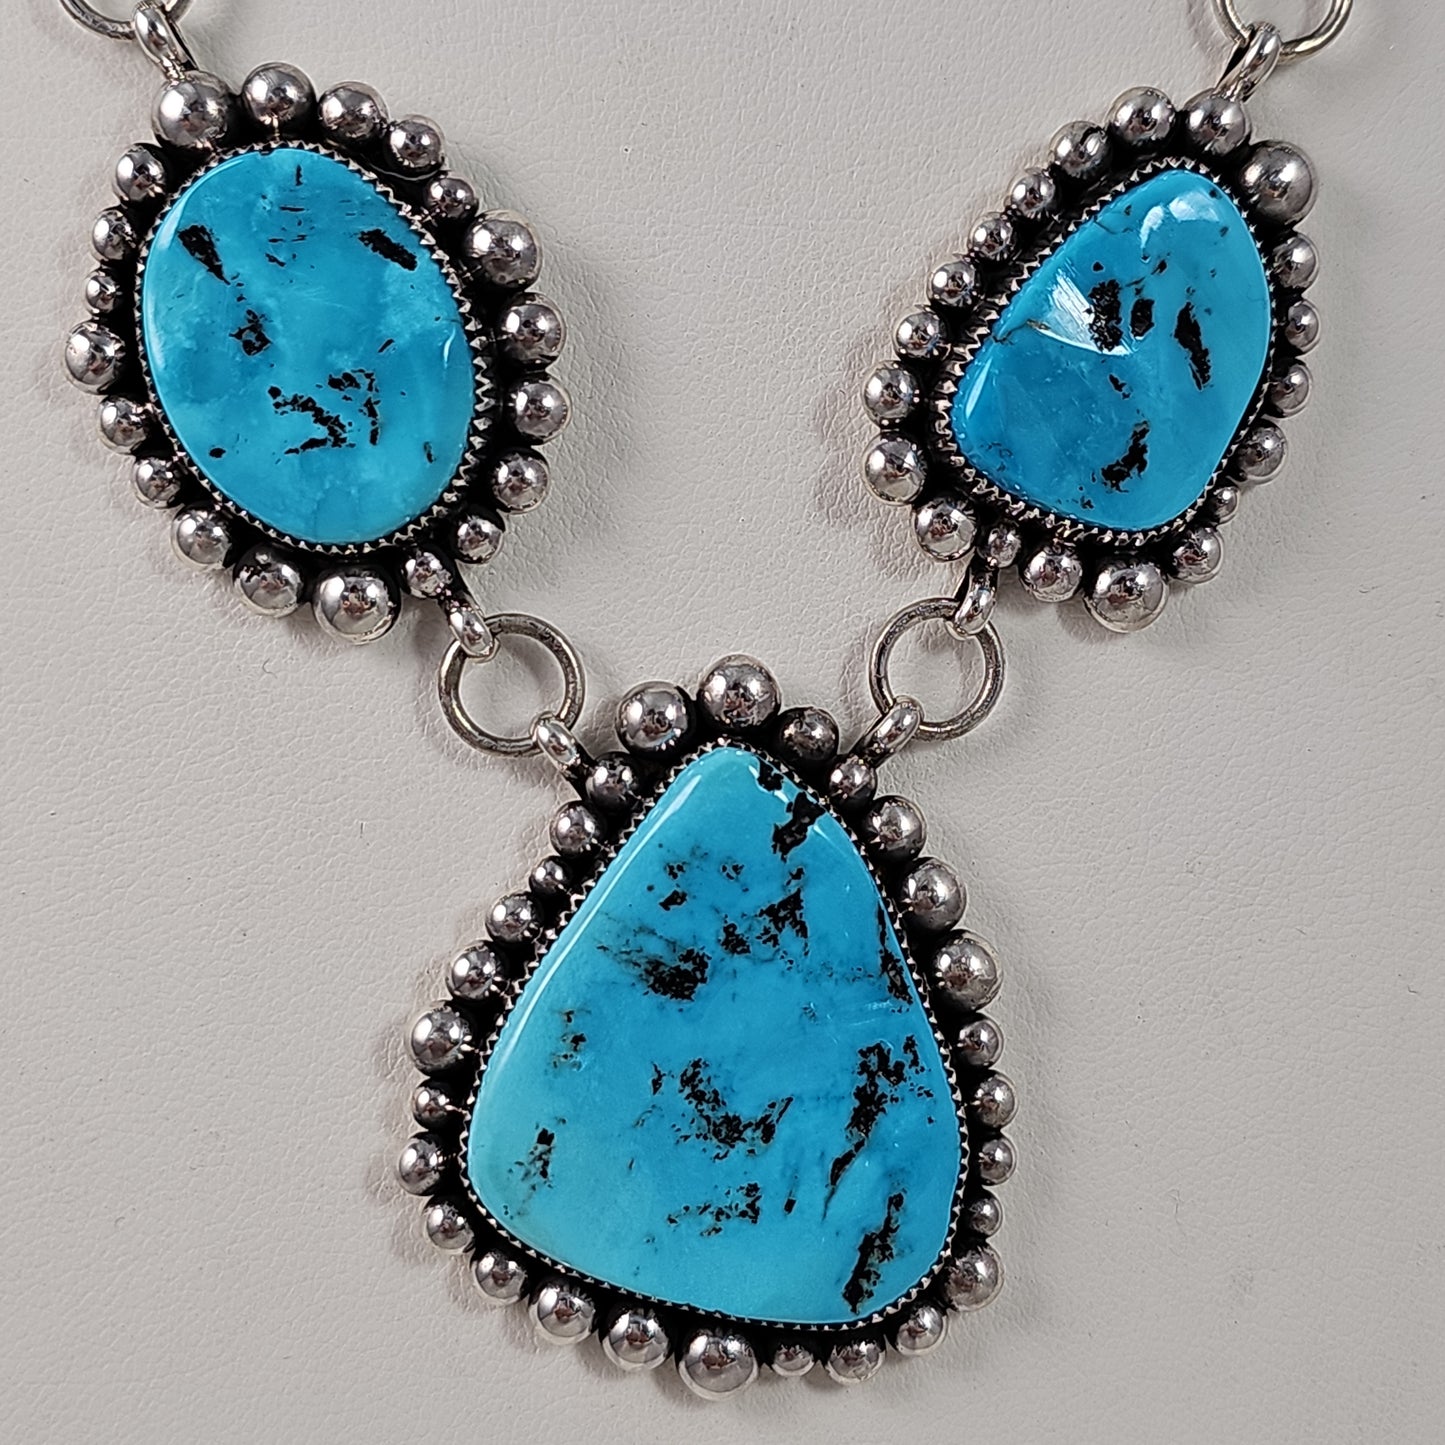 Kingman turquoise necklace